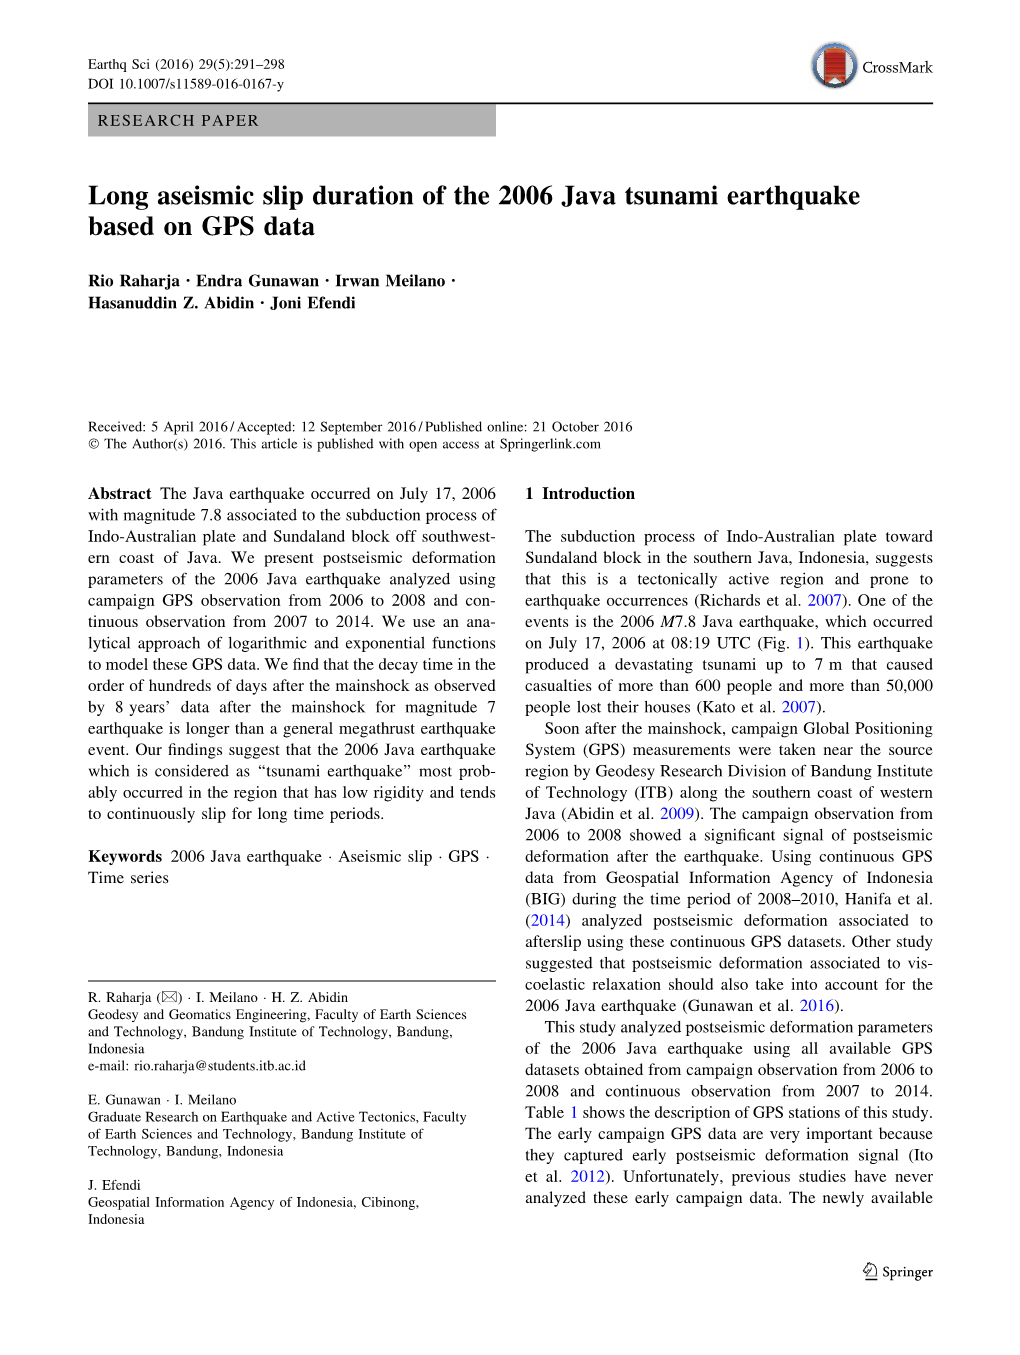 Long Aseismic Slip Duration of the 2006 Java Tsunami Earthquake Based on GPS Data